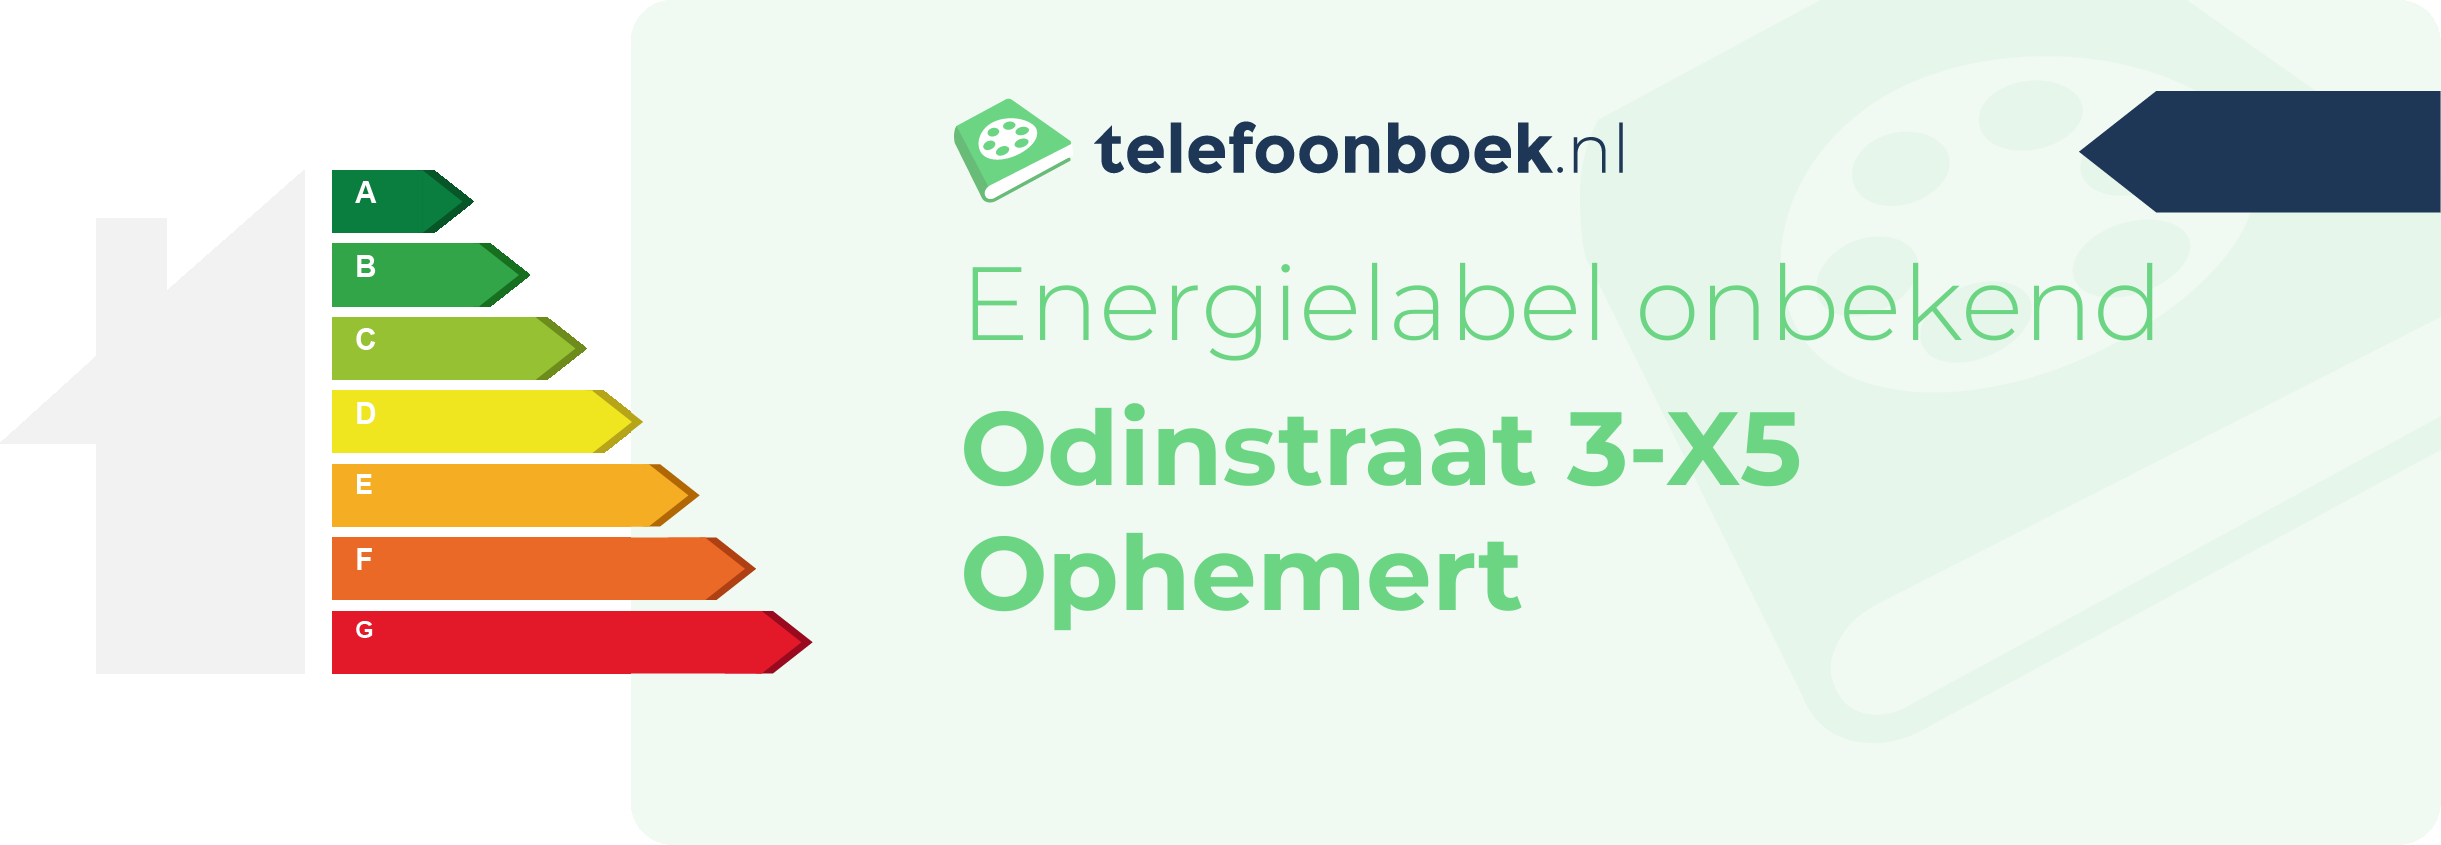 Energielabel Odinstraat 3-X5 Ophemert